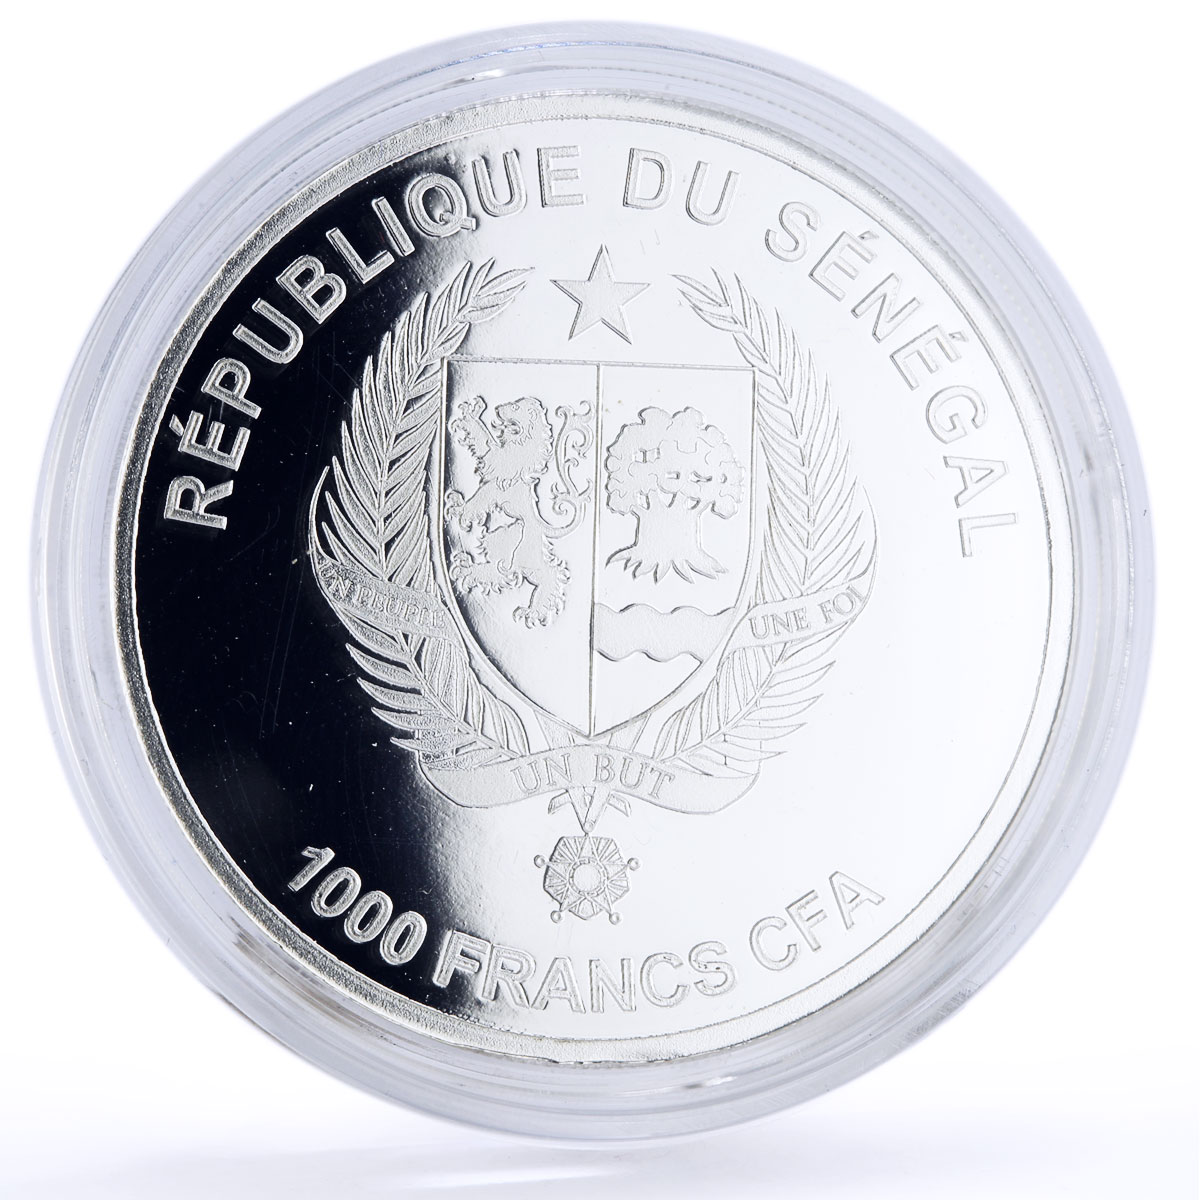 Senegal 1000 francs Seafaring Nao Victoria Ship Clipper proof silver coin 2017